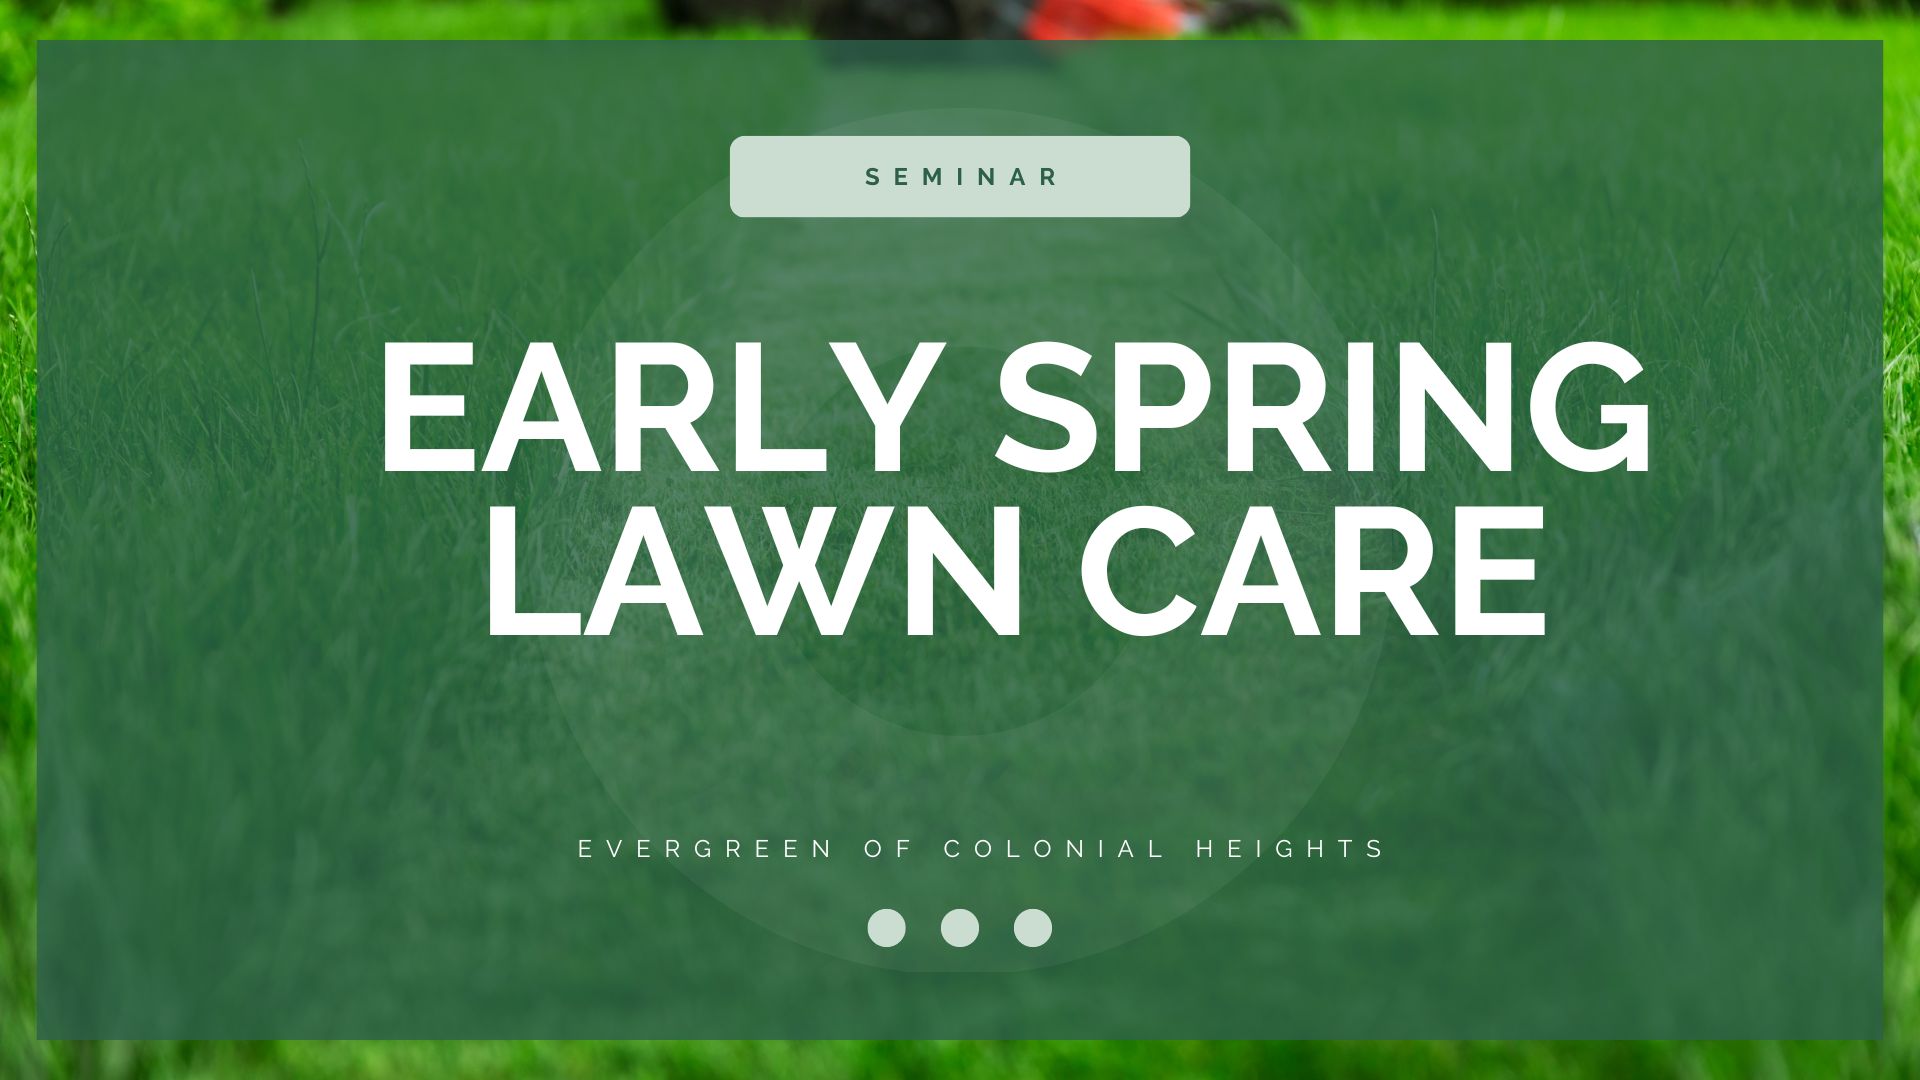 Early Spring Lawn Care Seminar Header